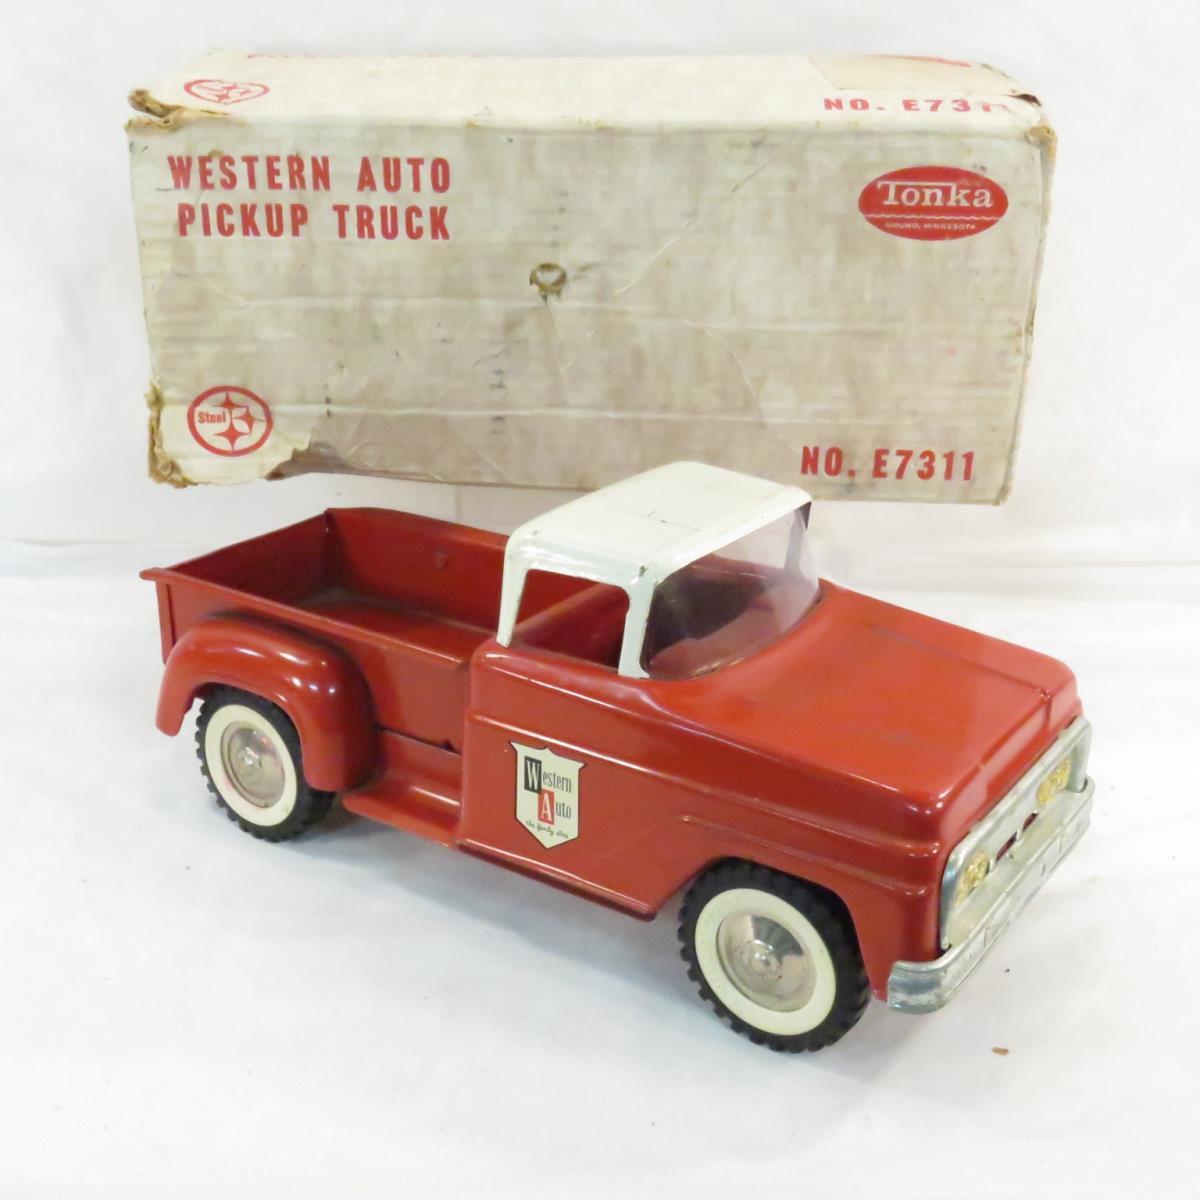 1960s Tonka Western Auto Pickup Truck in Original